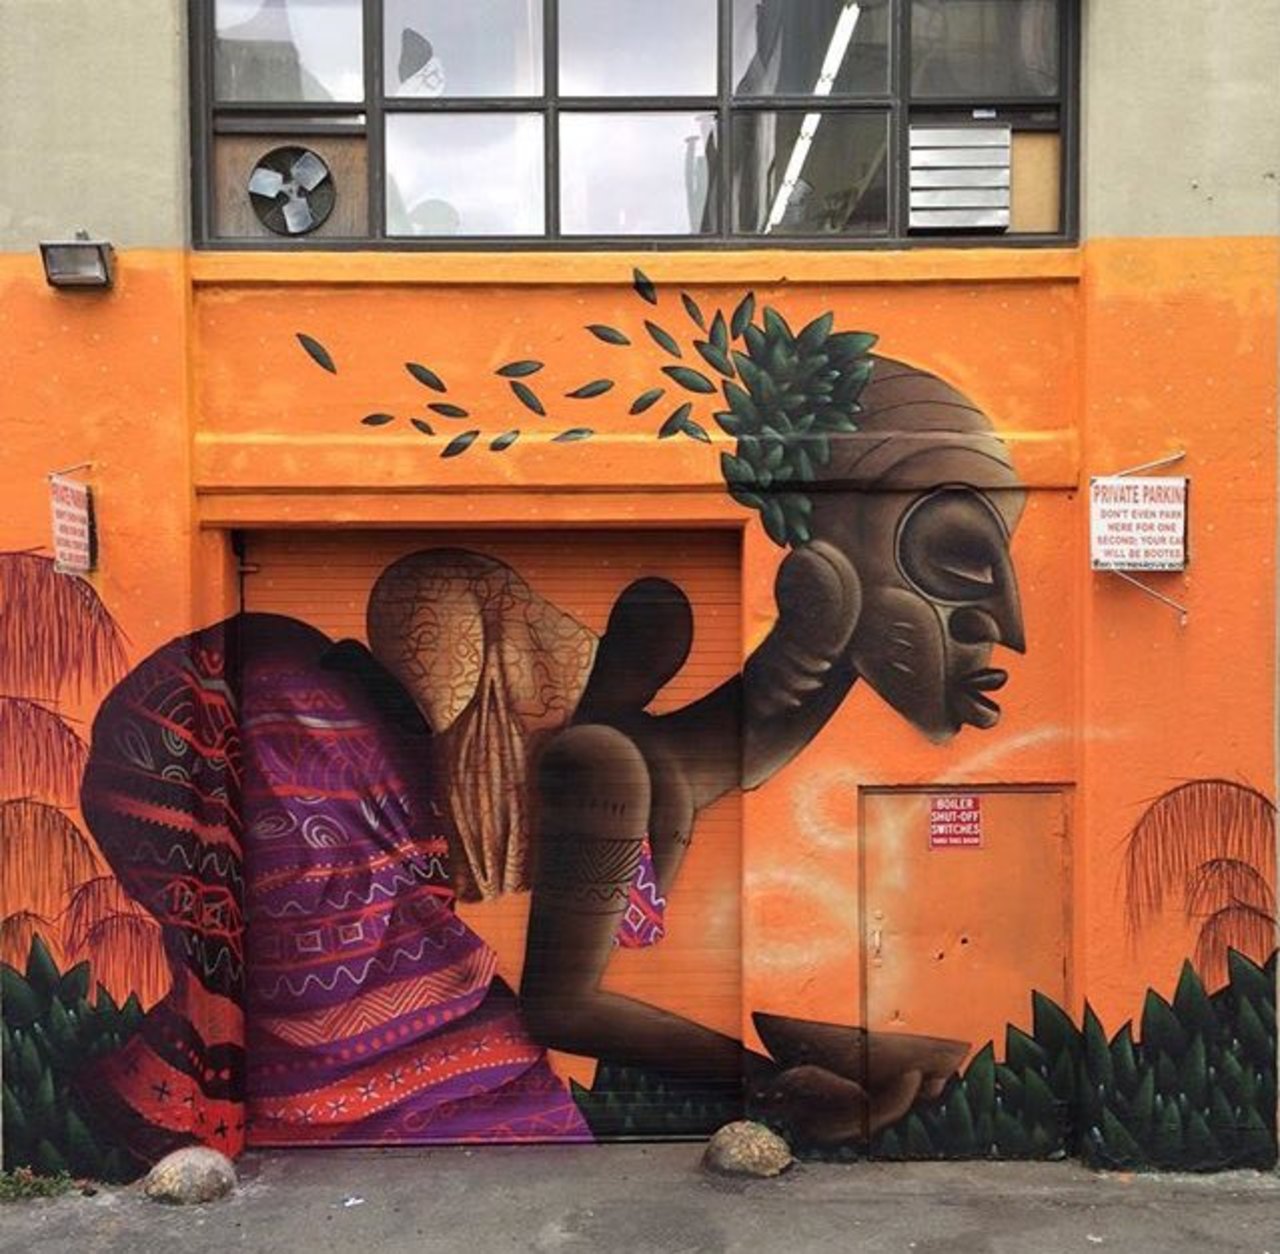 New Street Art by Alexandre Keto in NYC 

#art #graffiti #mural #streetart https://t.co/COXl4dyPRG